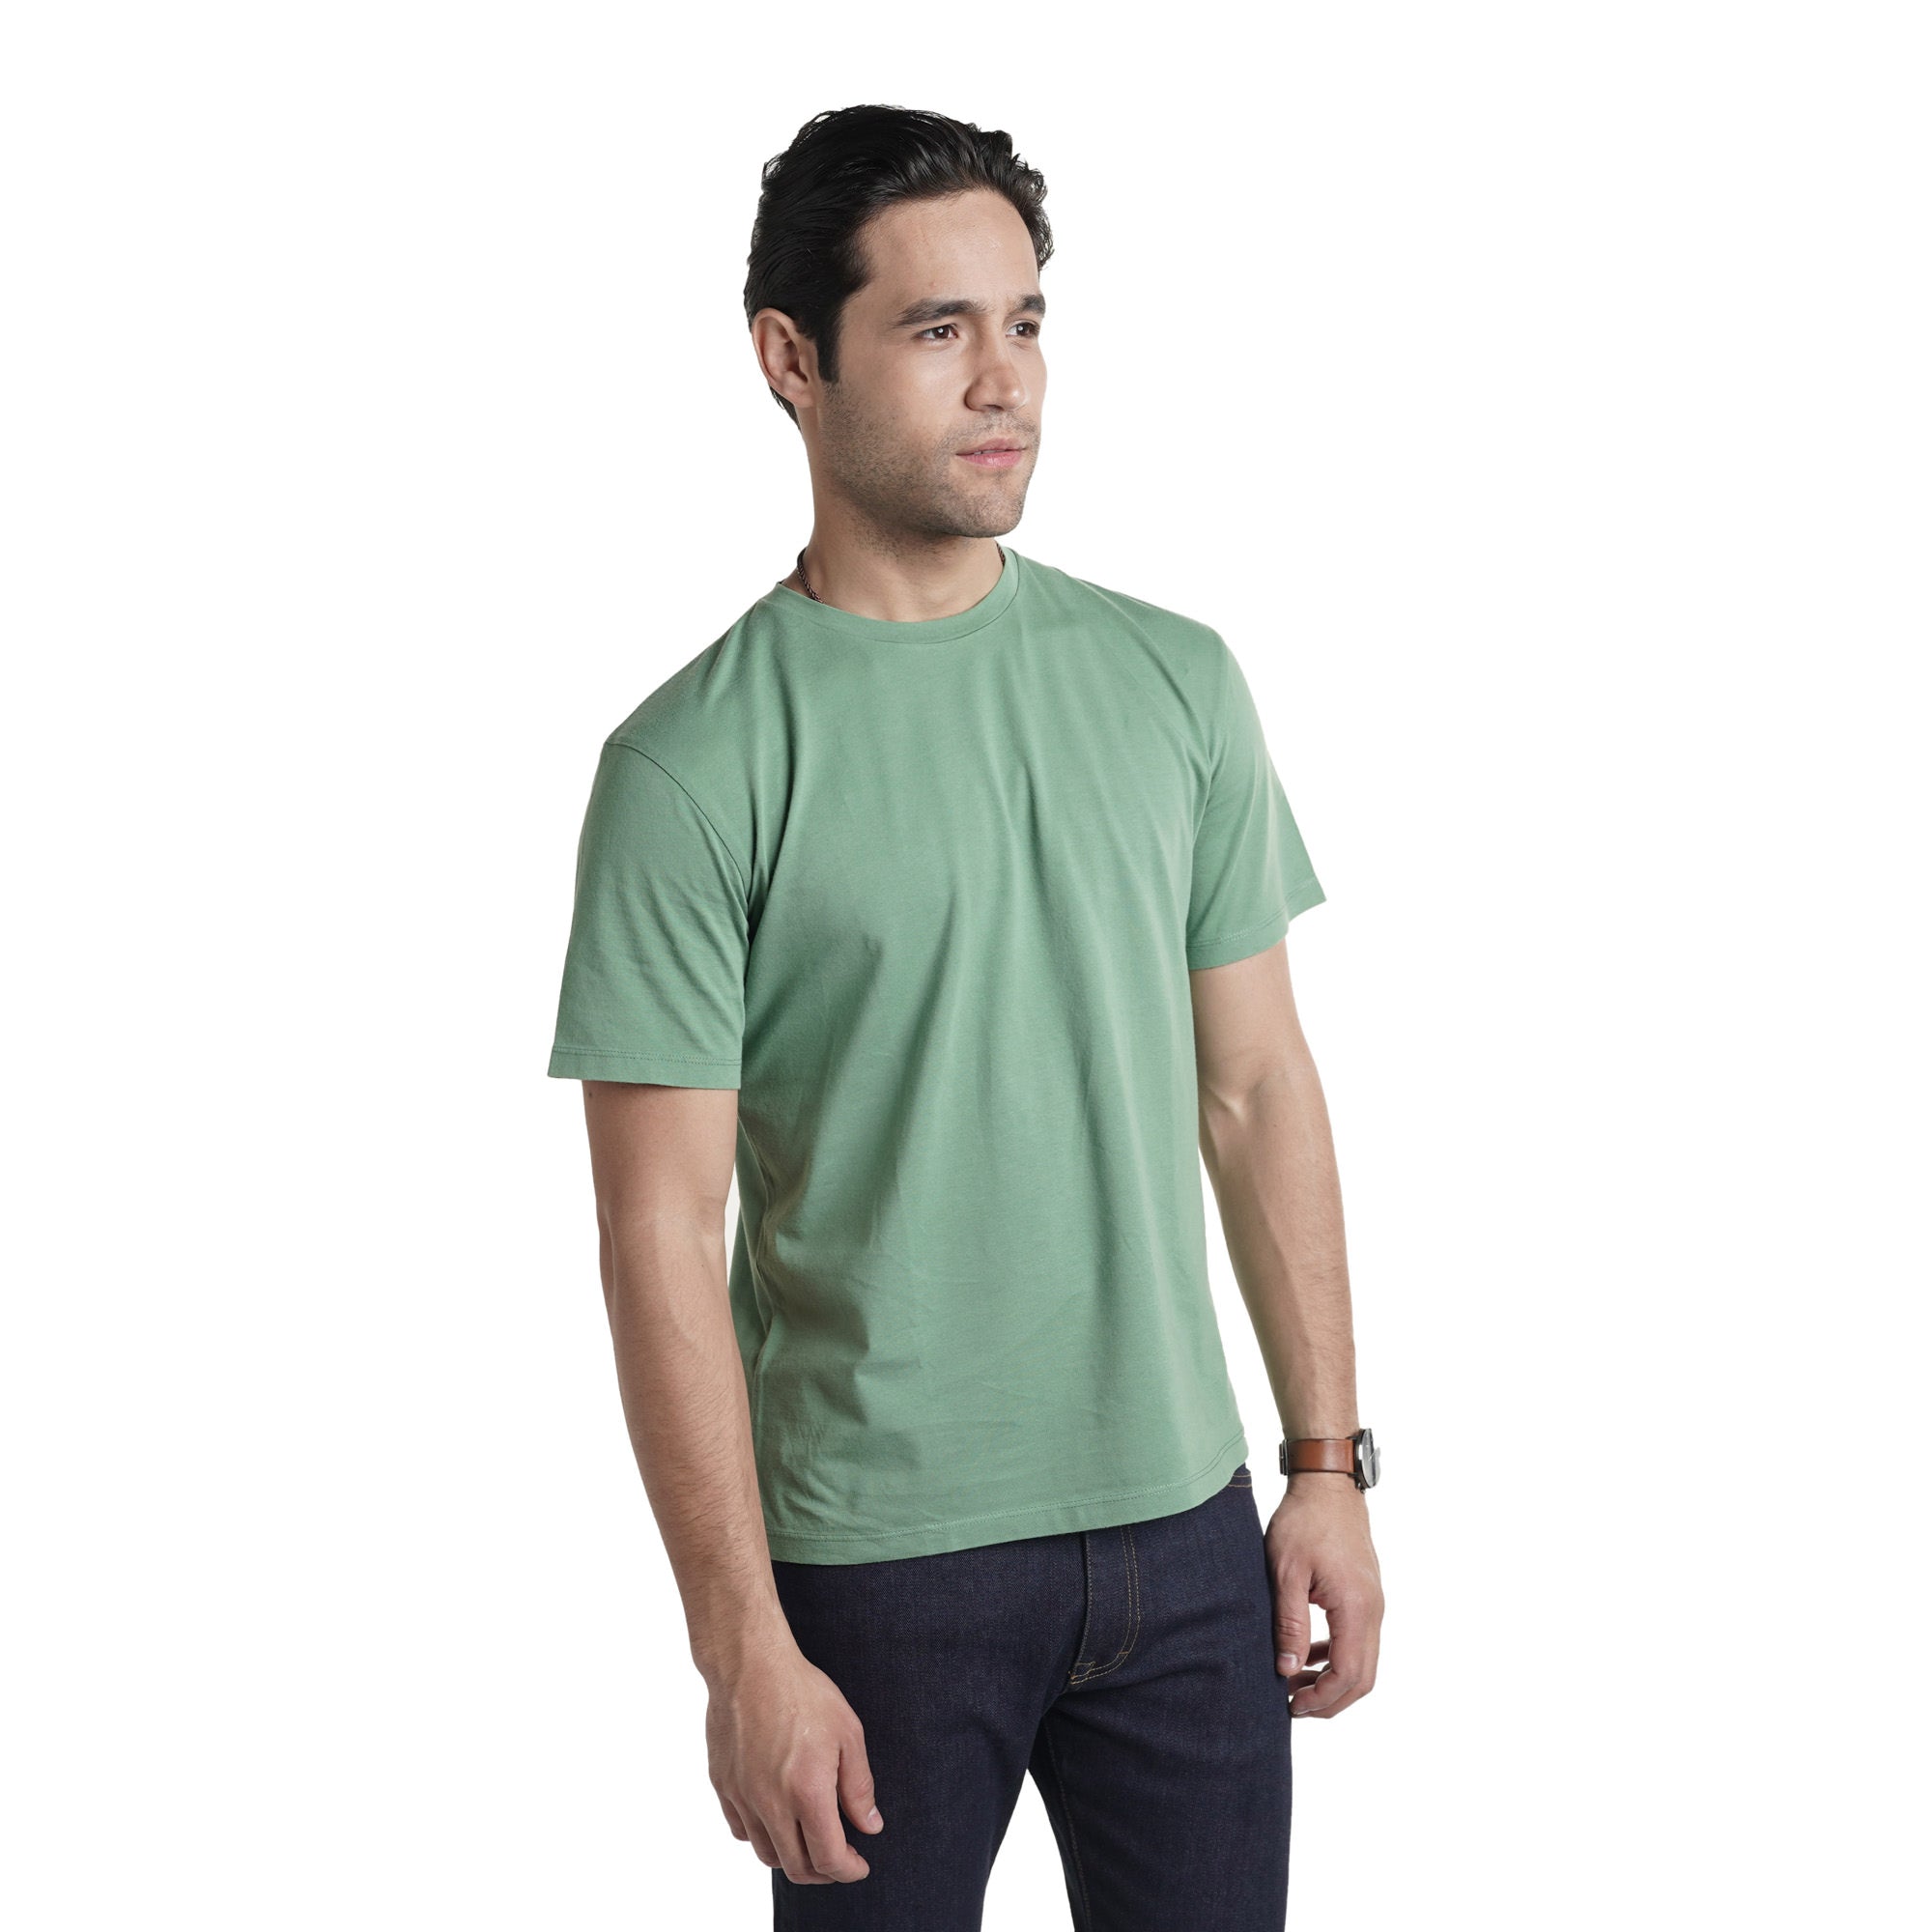 Vintage Crew T-Shirt - Army Green